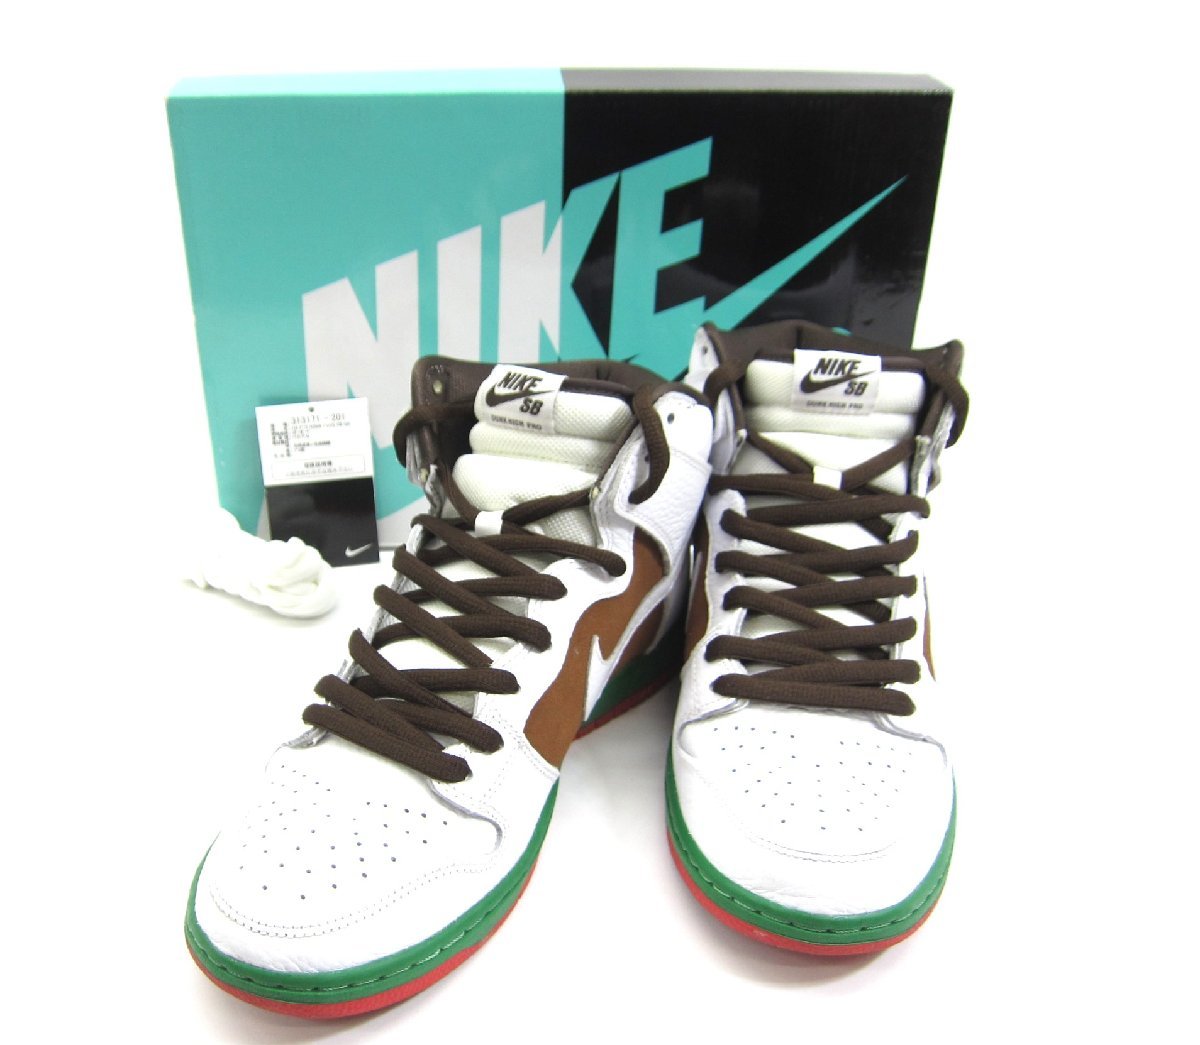 NIKE Nike DUNK HIGH PREMIUM SB CALIFORNIA 313171-201 SIZE:US11 29.0cm men's sneakers shoes *UT10936